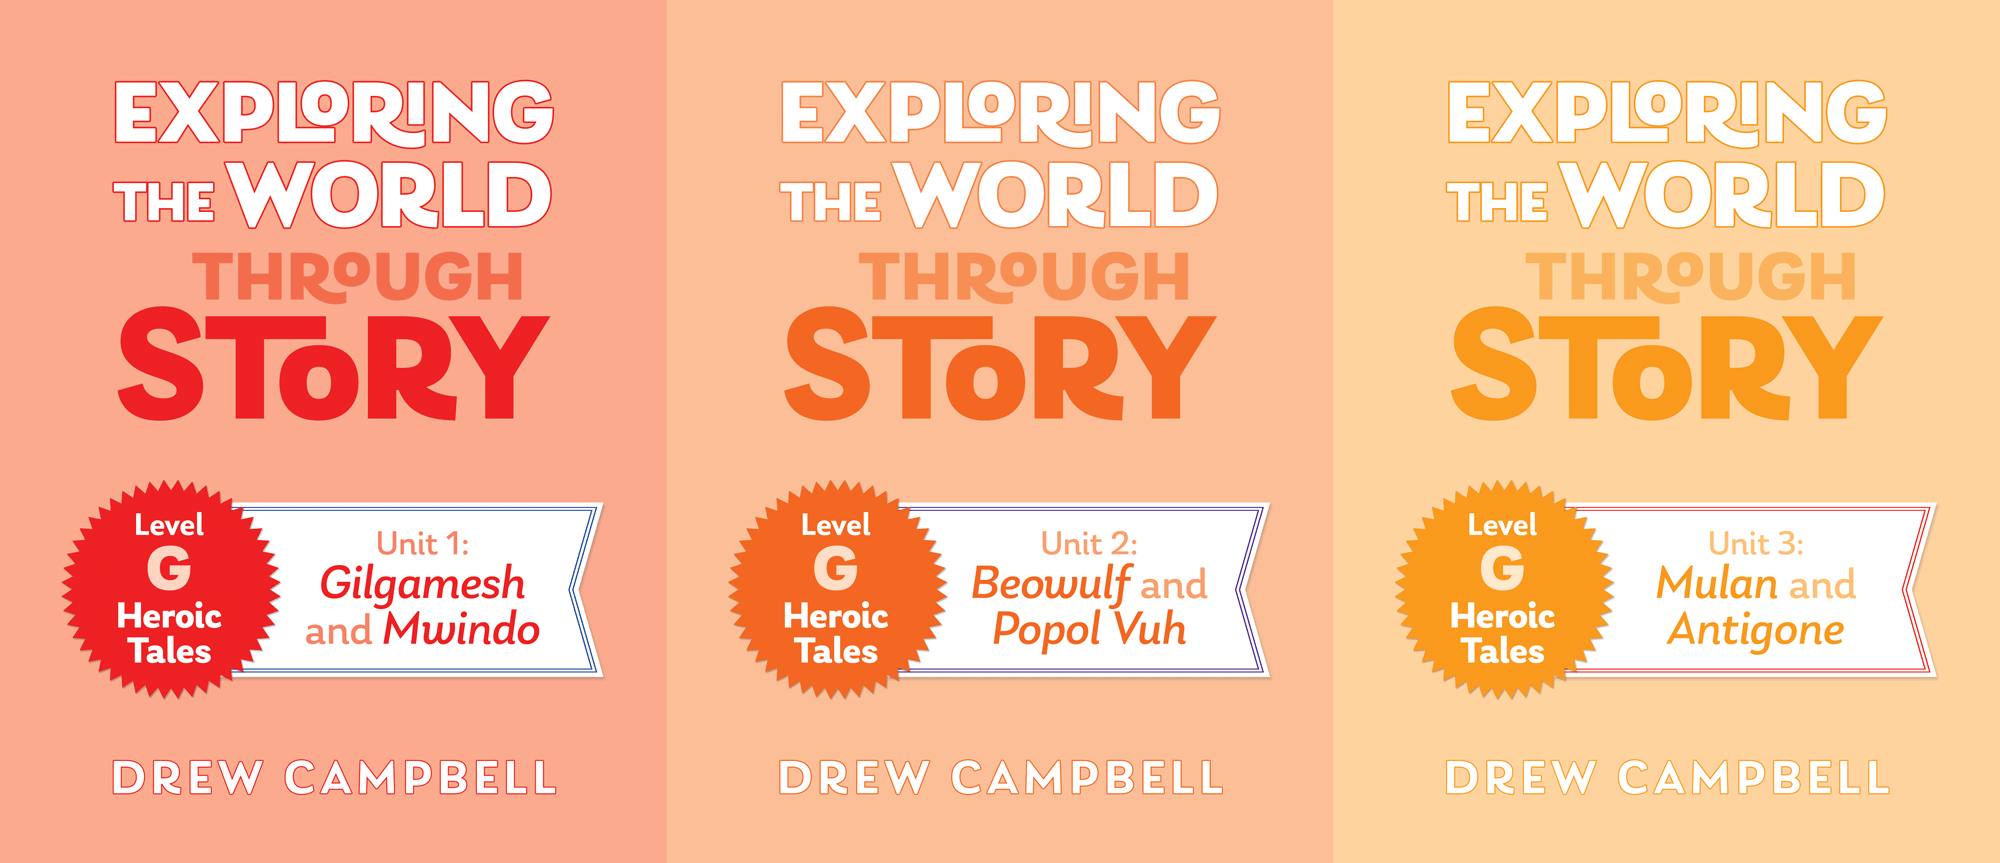 Exploring the World through Story, Level G